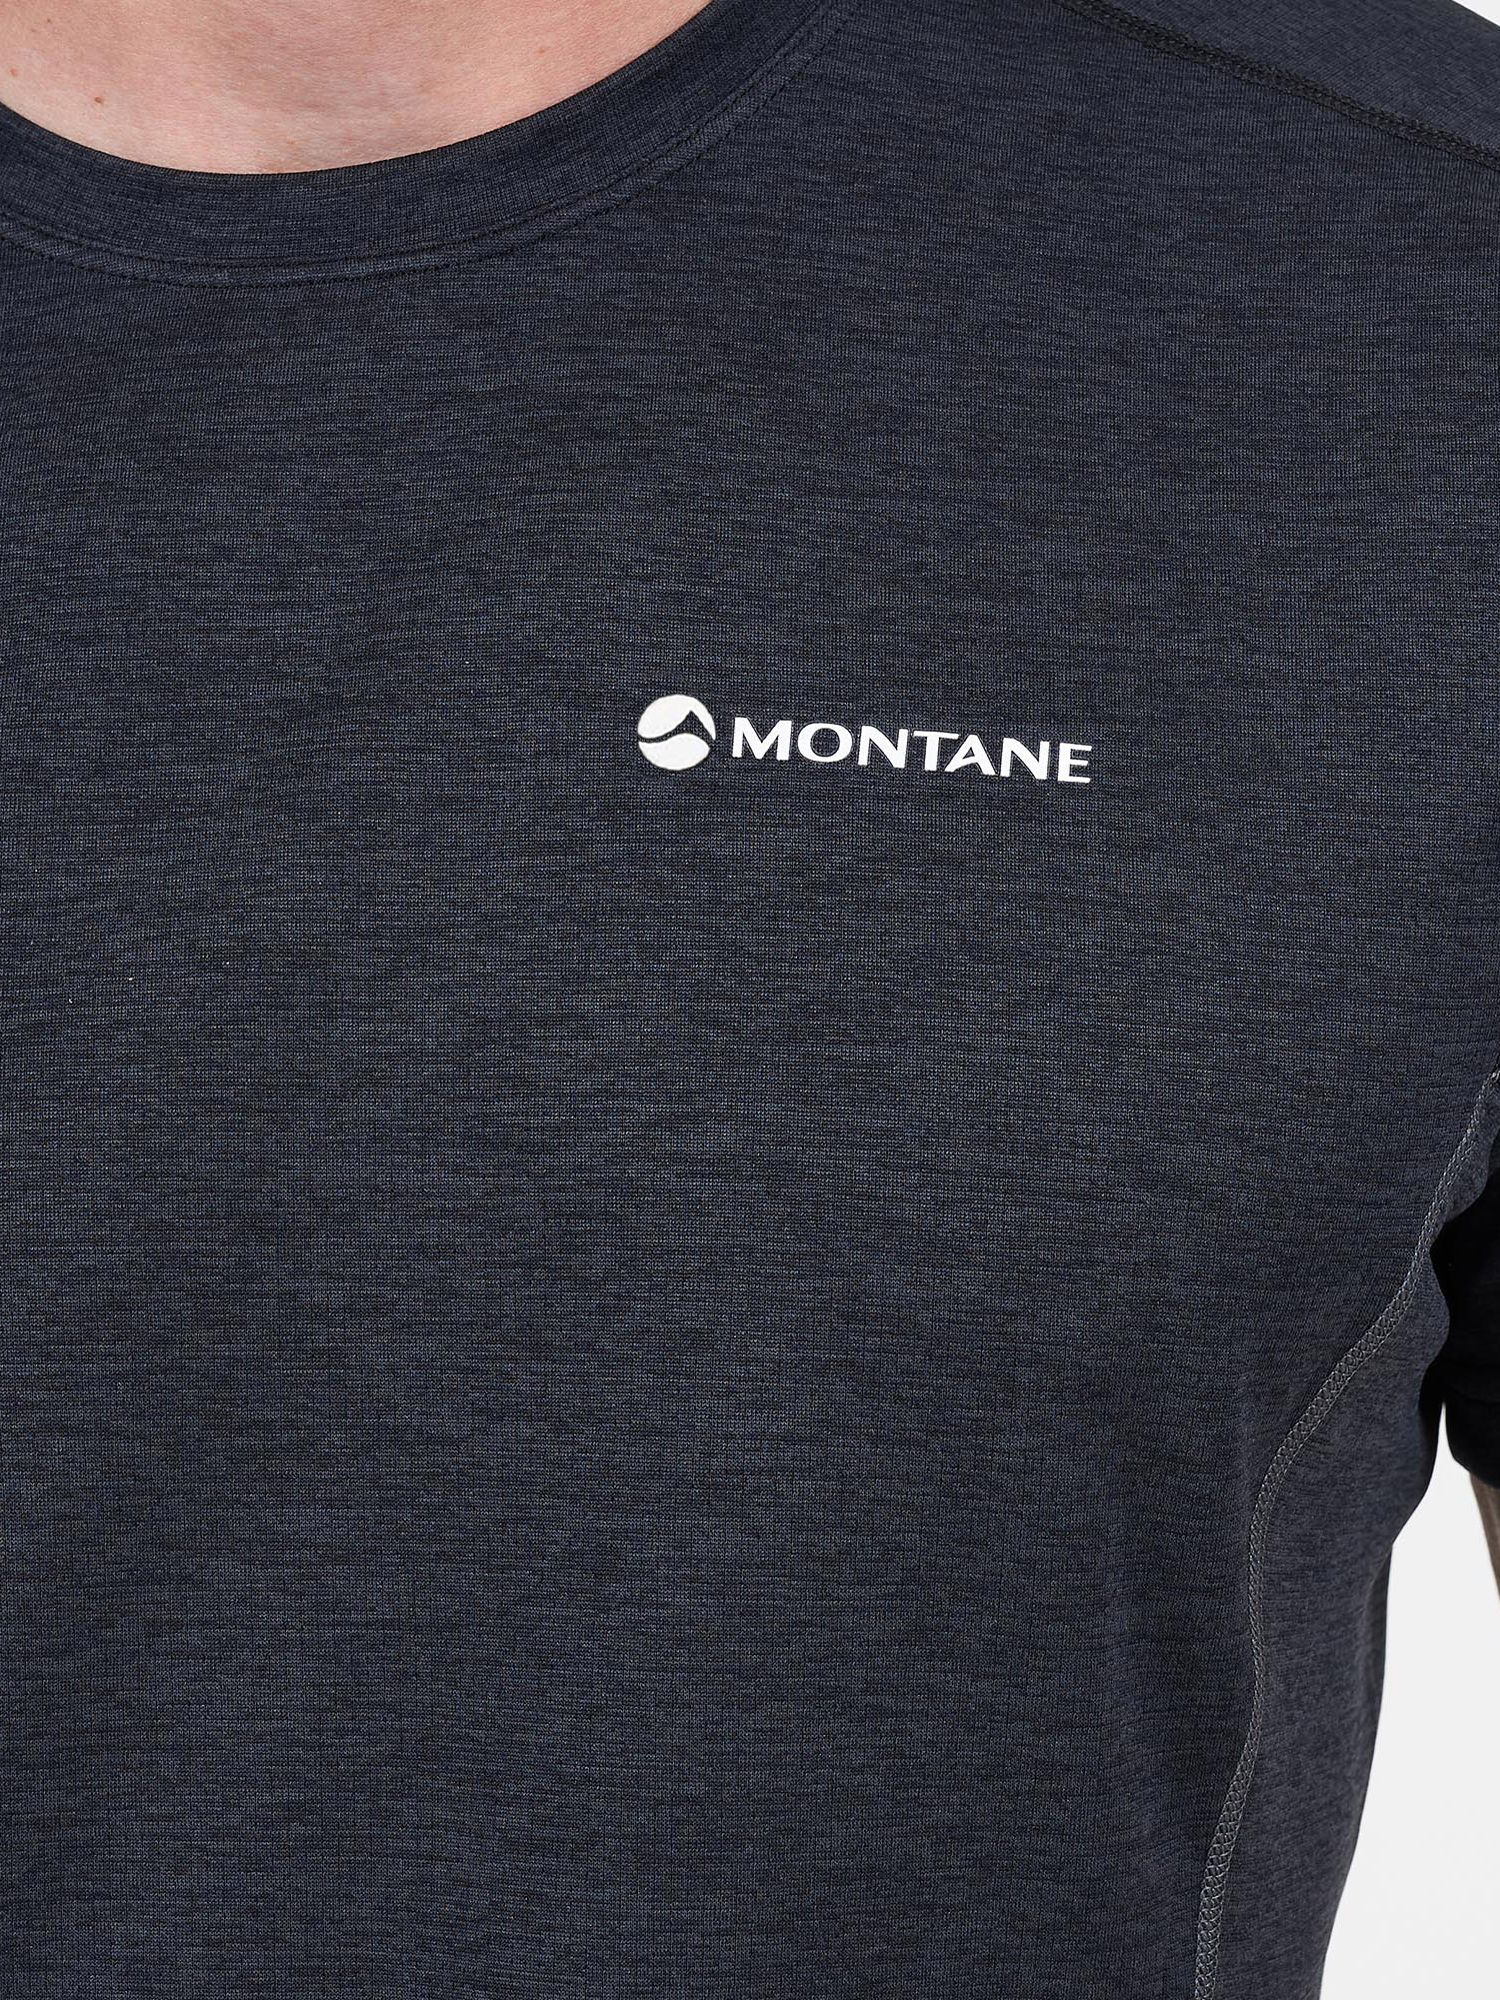 Buy Montane Dart Recycled Short Sleeve Top Online at johnlewis.com